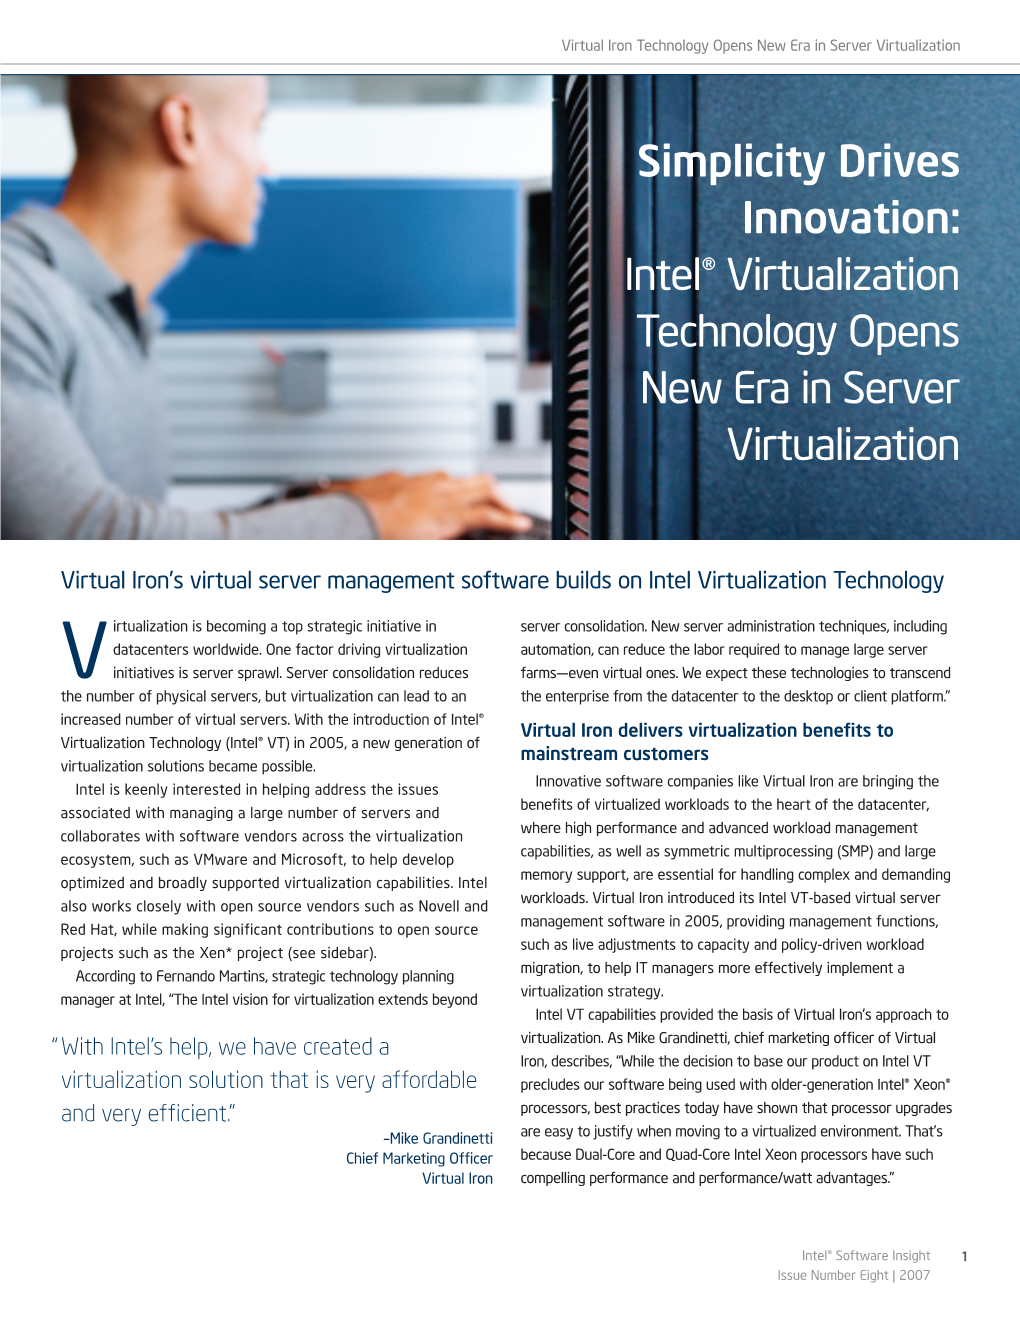 Simplicity Drives Innovation: Intel® Virtualization Technology Opens New Era in Server Virtualization